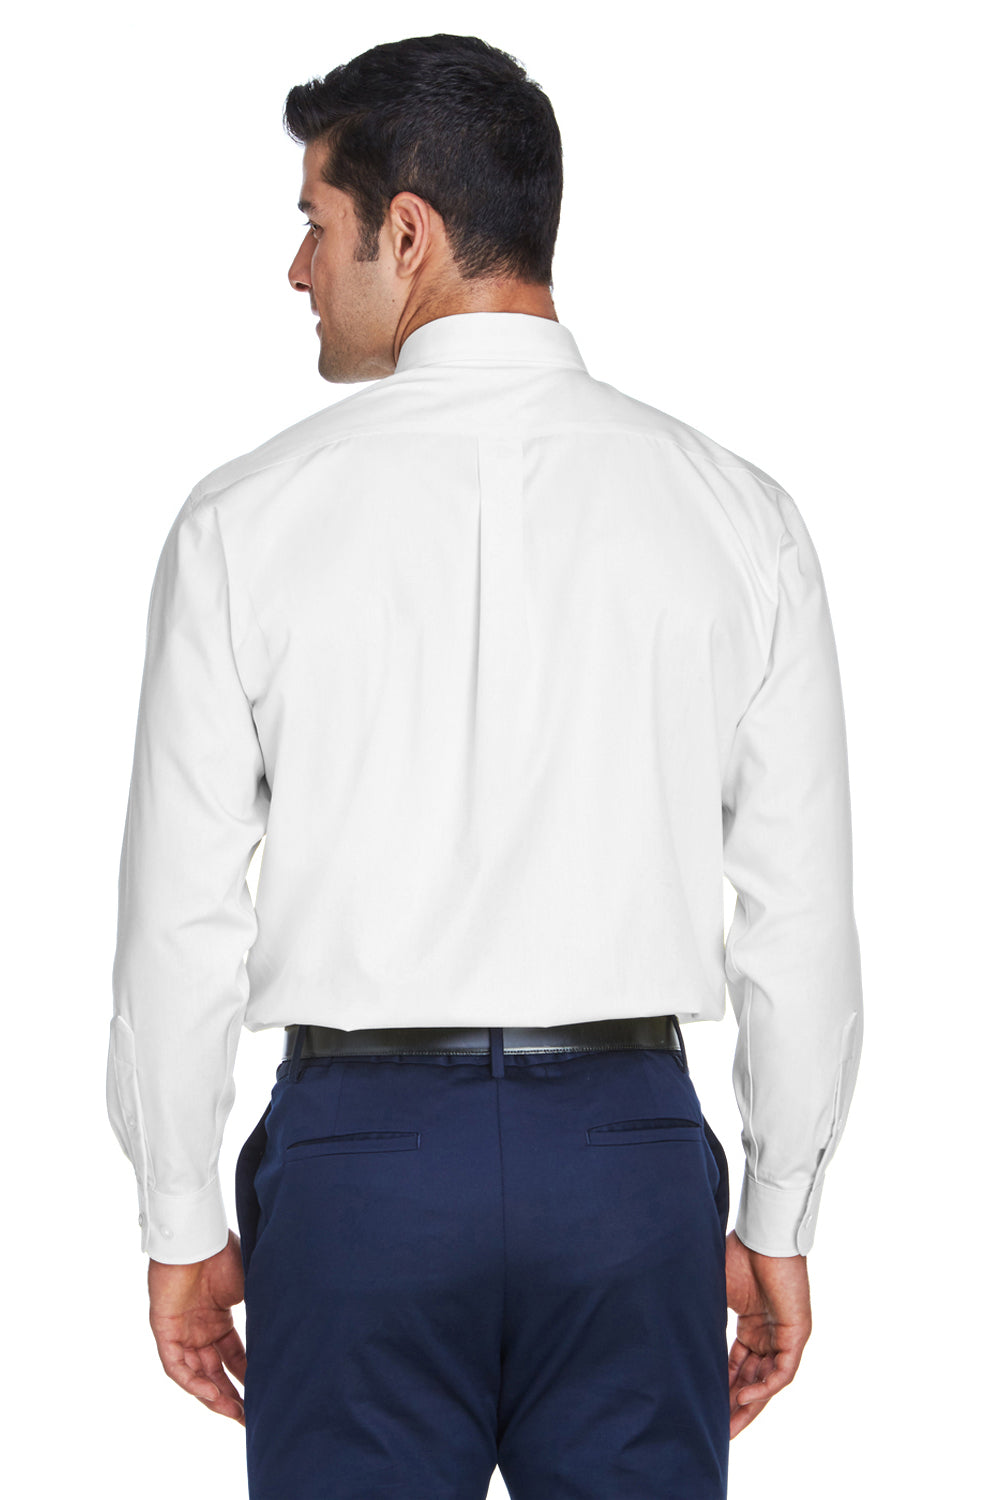 Devon & Jones D630 Mens Crown Woven Collection Wrinkle Resistant Long Sleeve Button Down Shirt w/ Pocket White Back